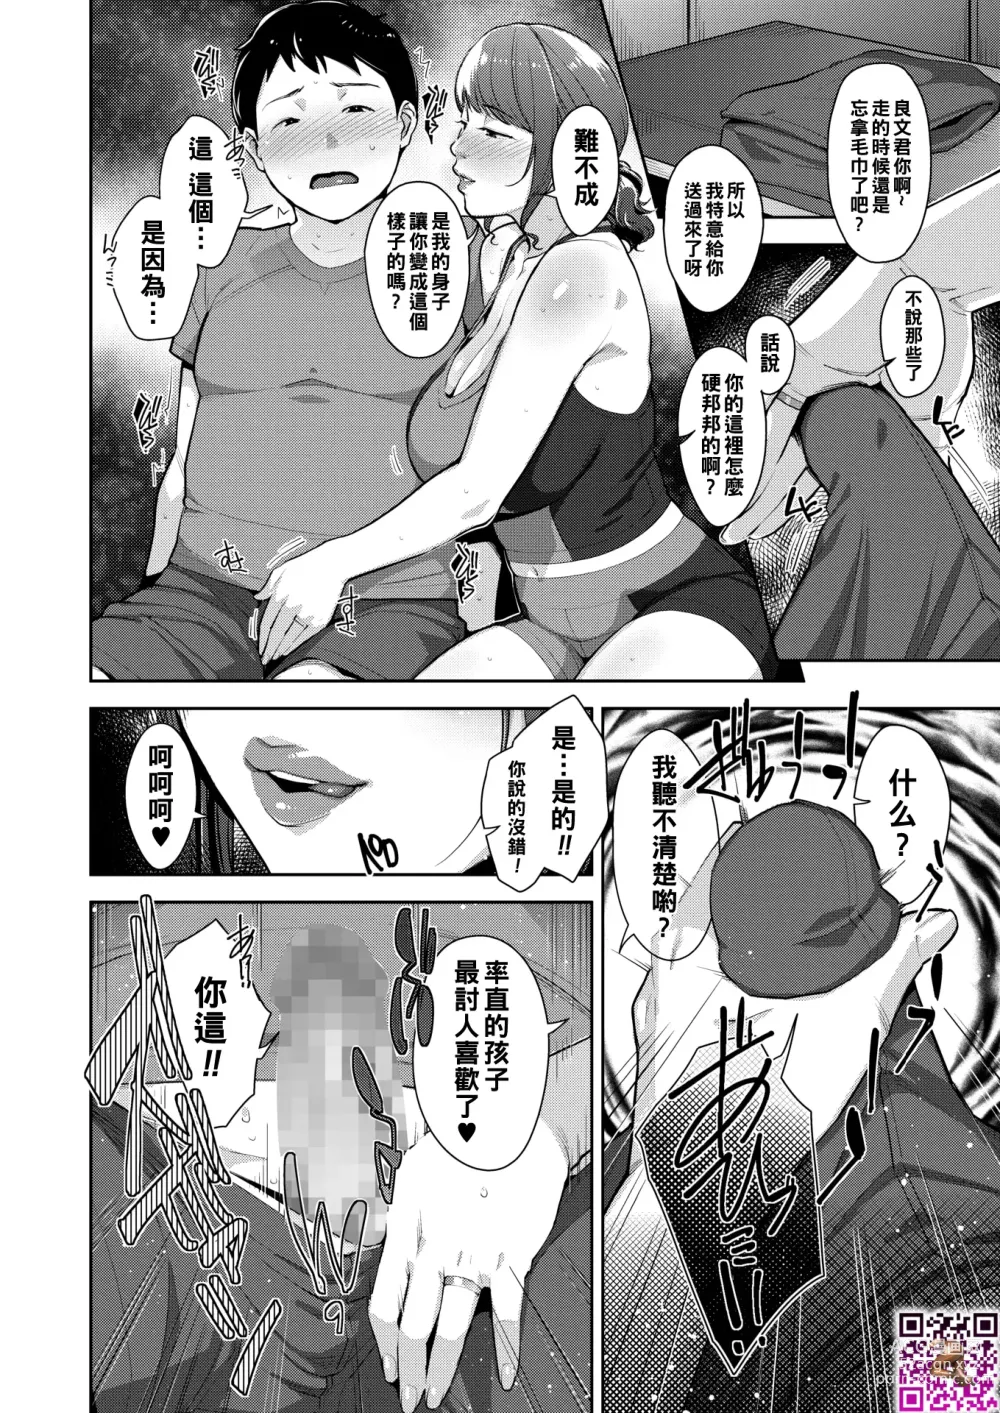 Page 8 of manga PHYSICAROOM